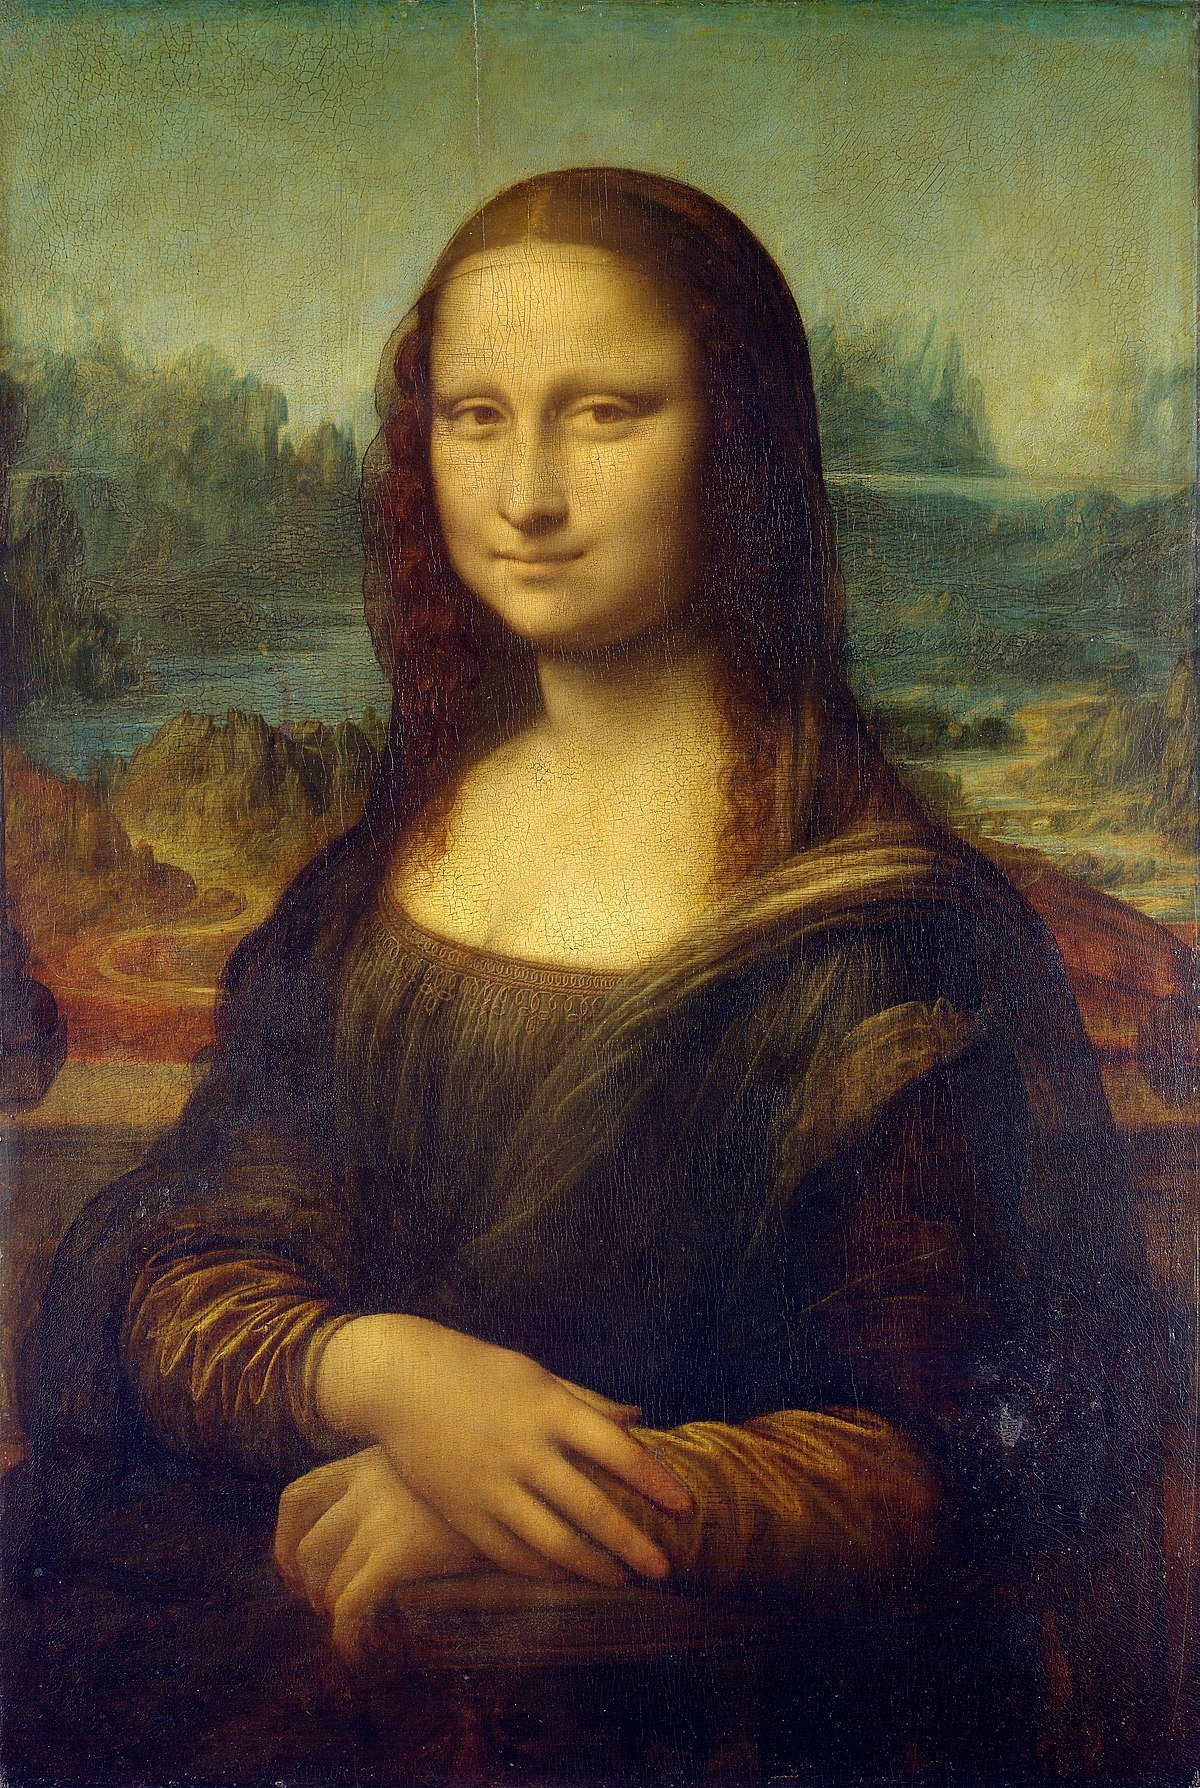 Mona Lisa Leonardo da Vinci 1503-1516 The Louvre Museum